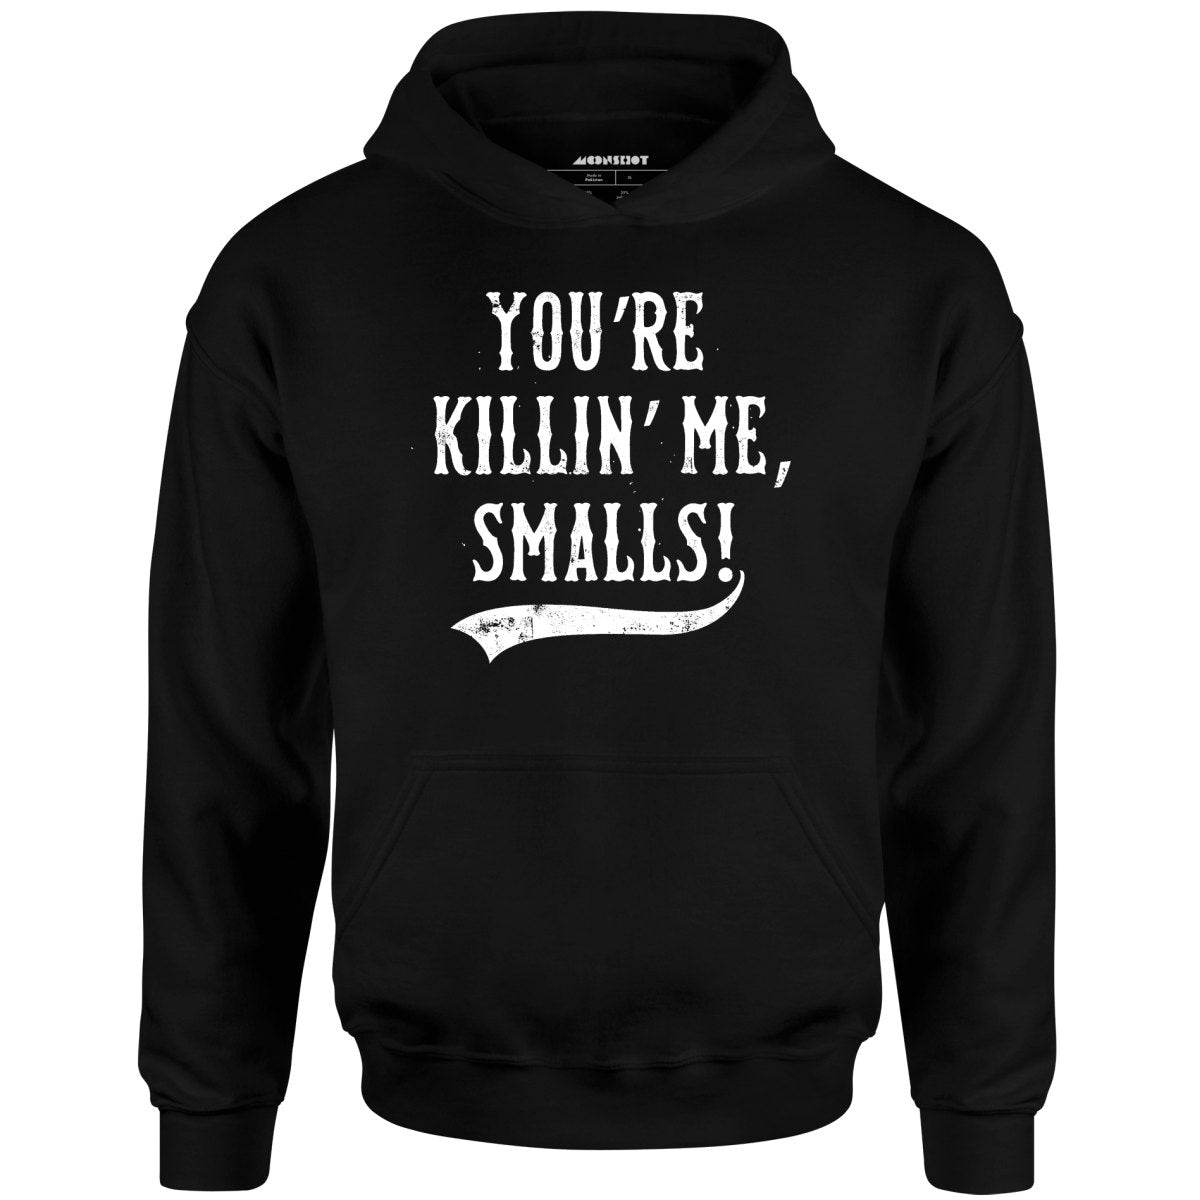 You're Killin' Me, Smalls! - Unisex Hoodie